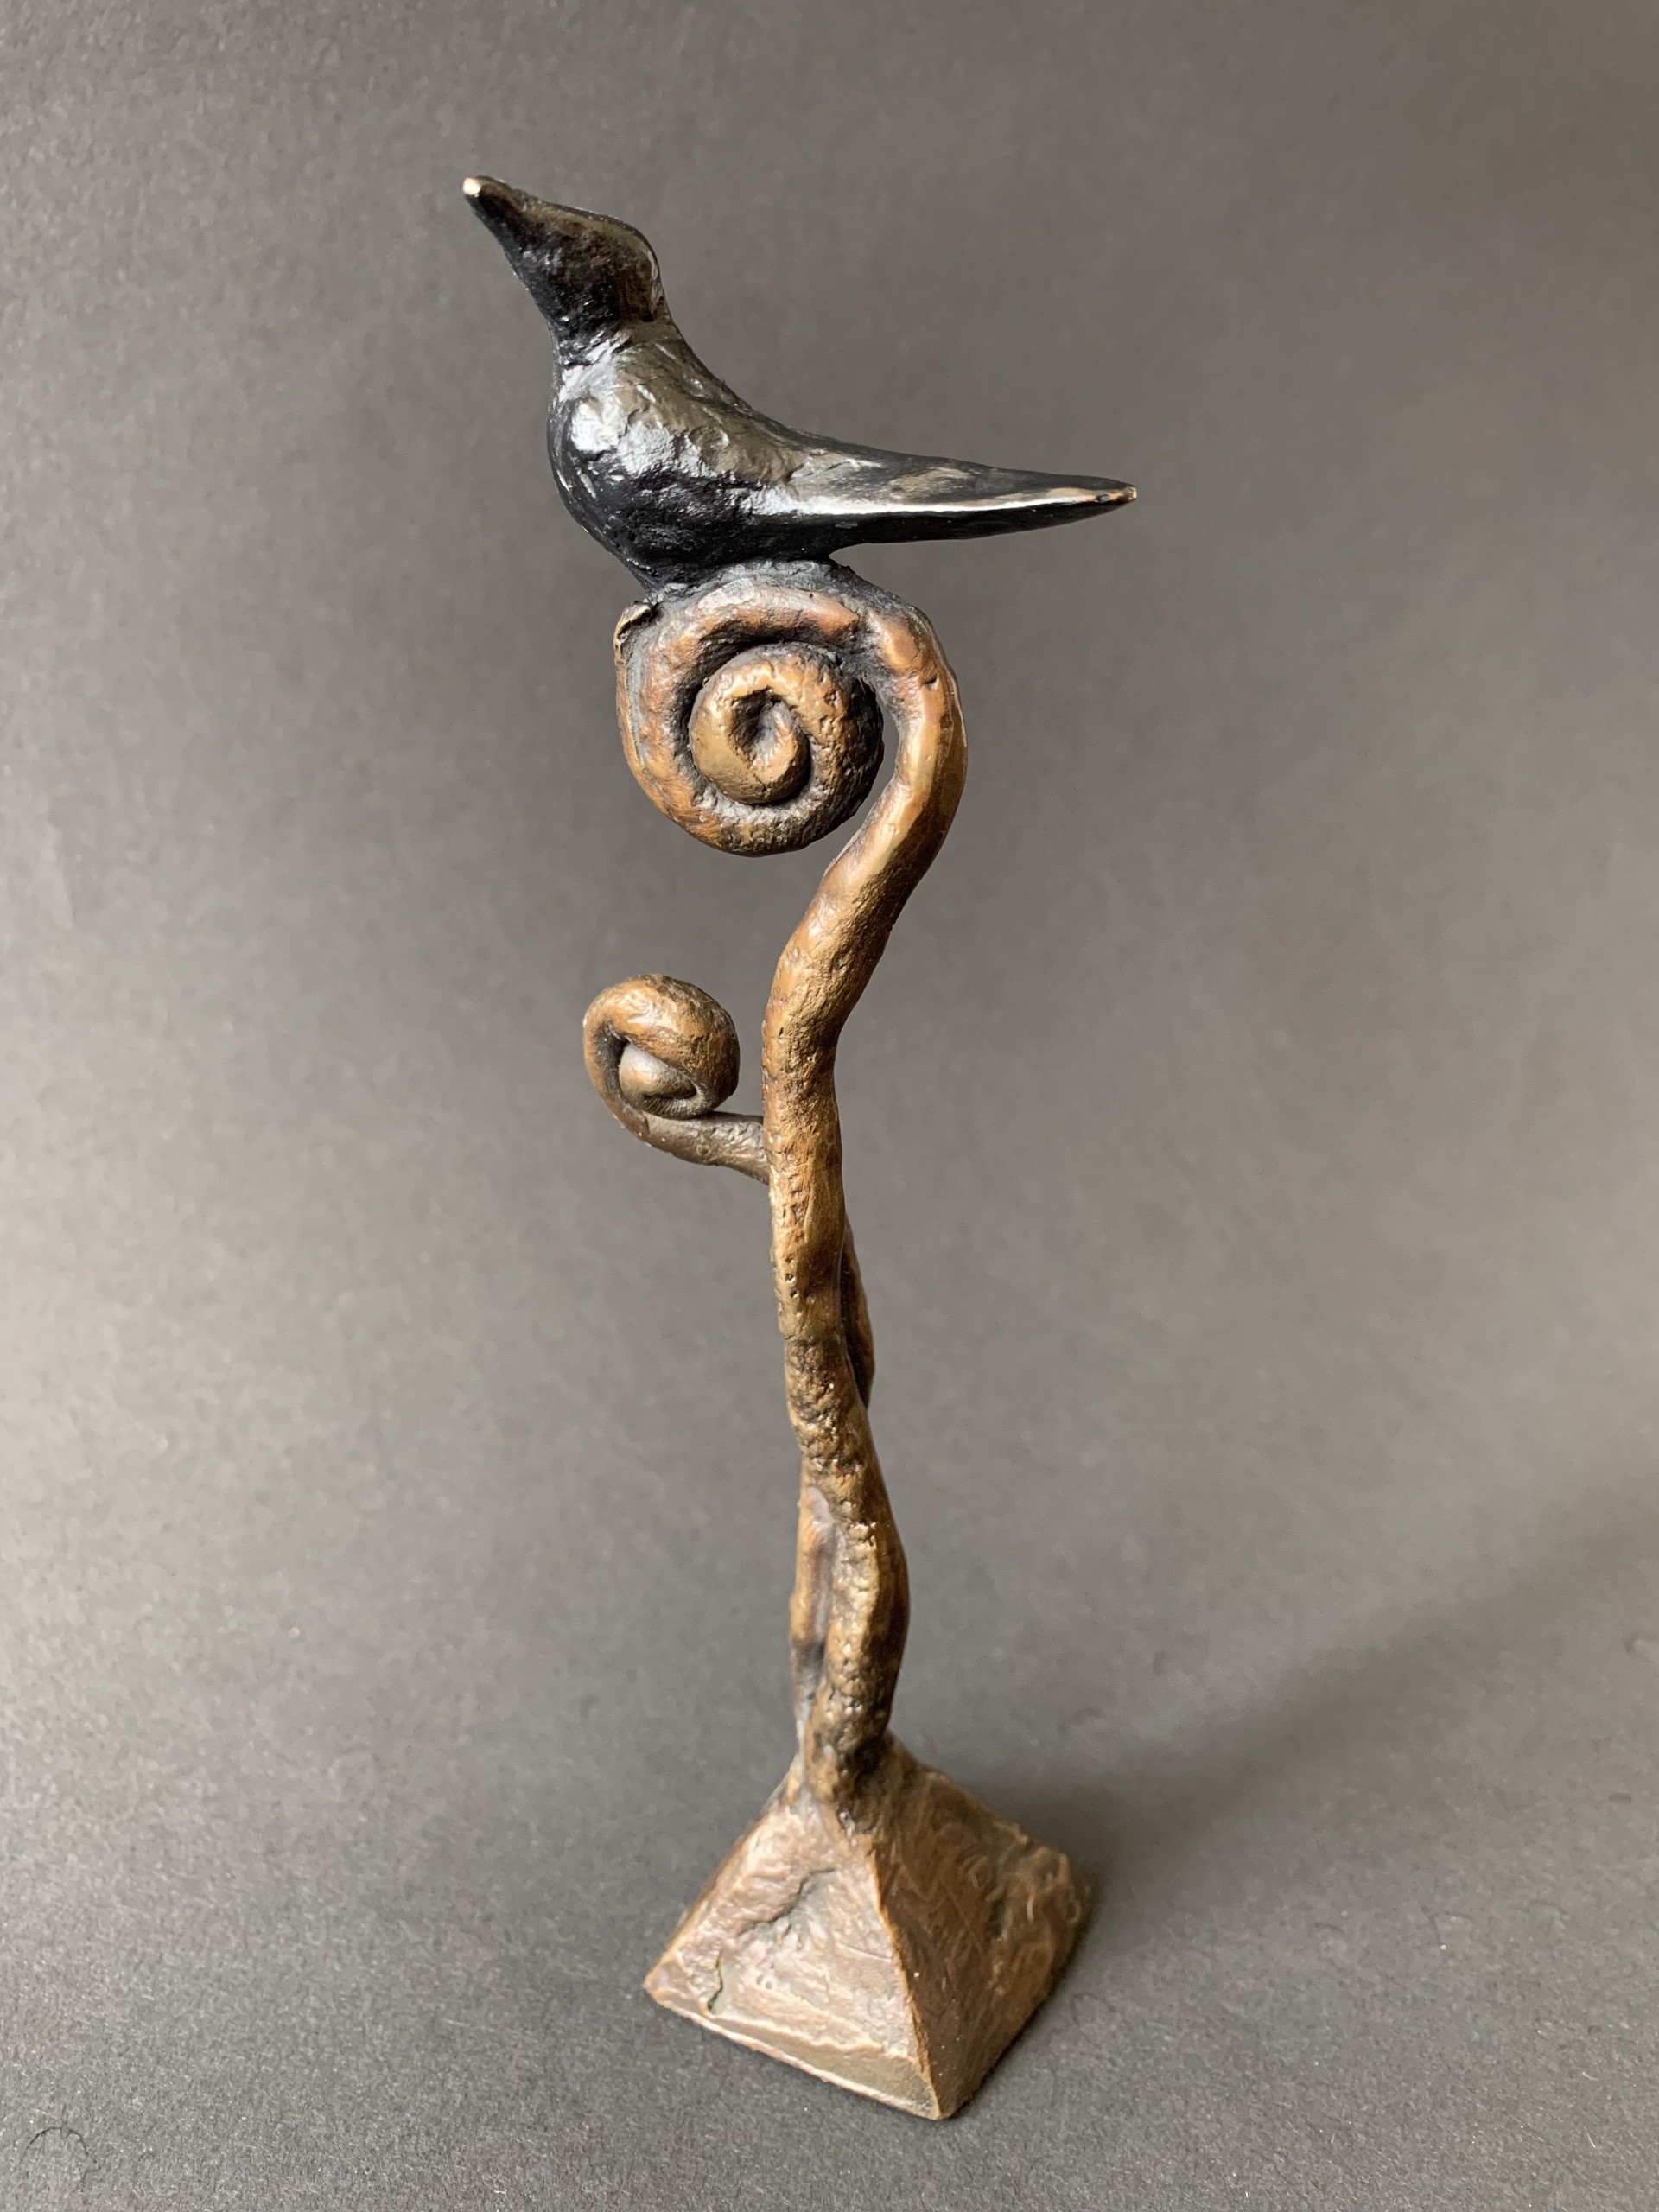 Tiny Blackbird on a Fiddlehead by Copper Tritscheller